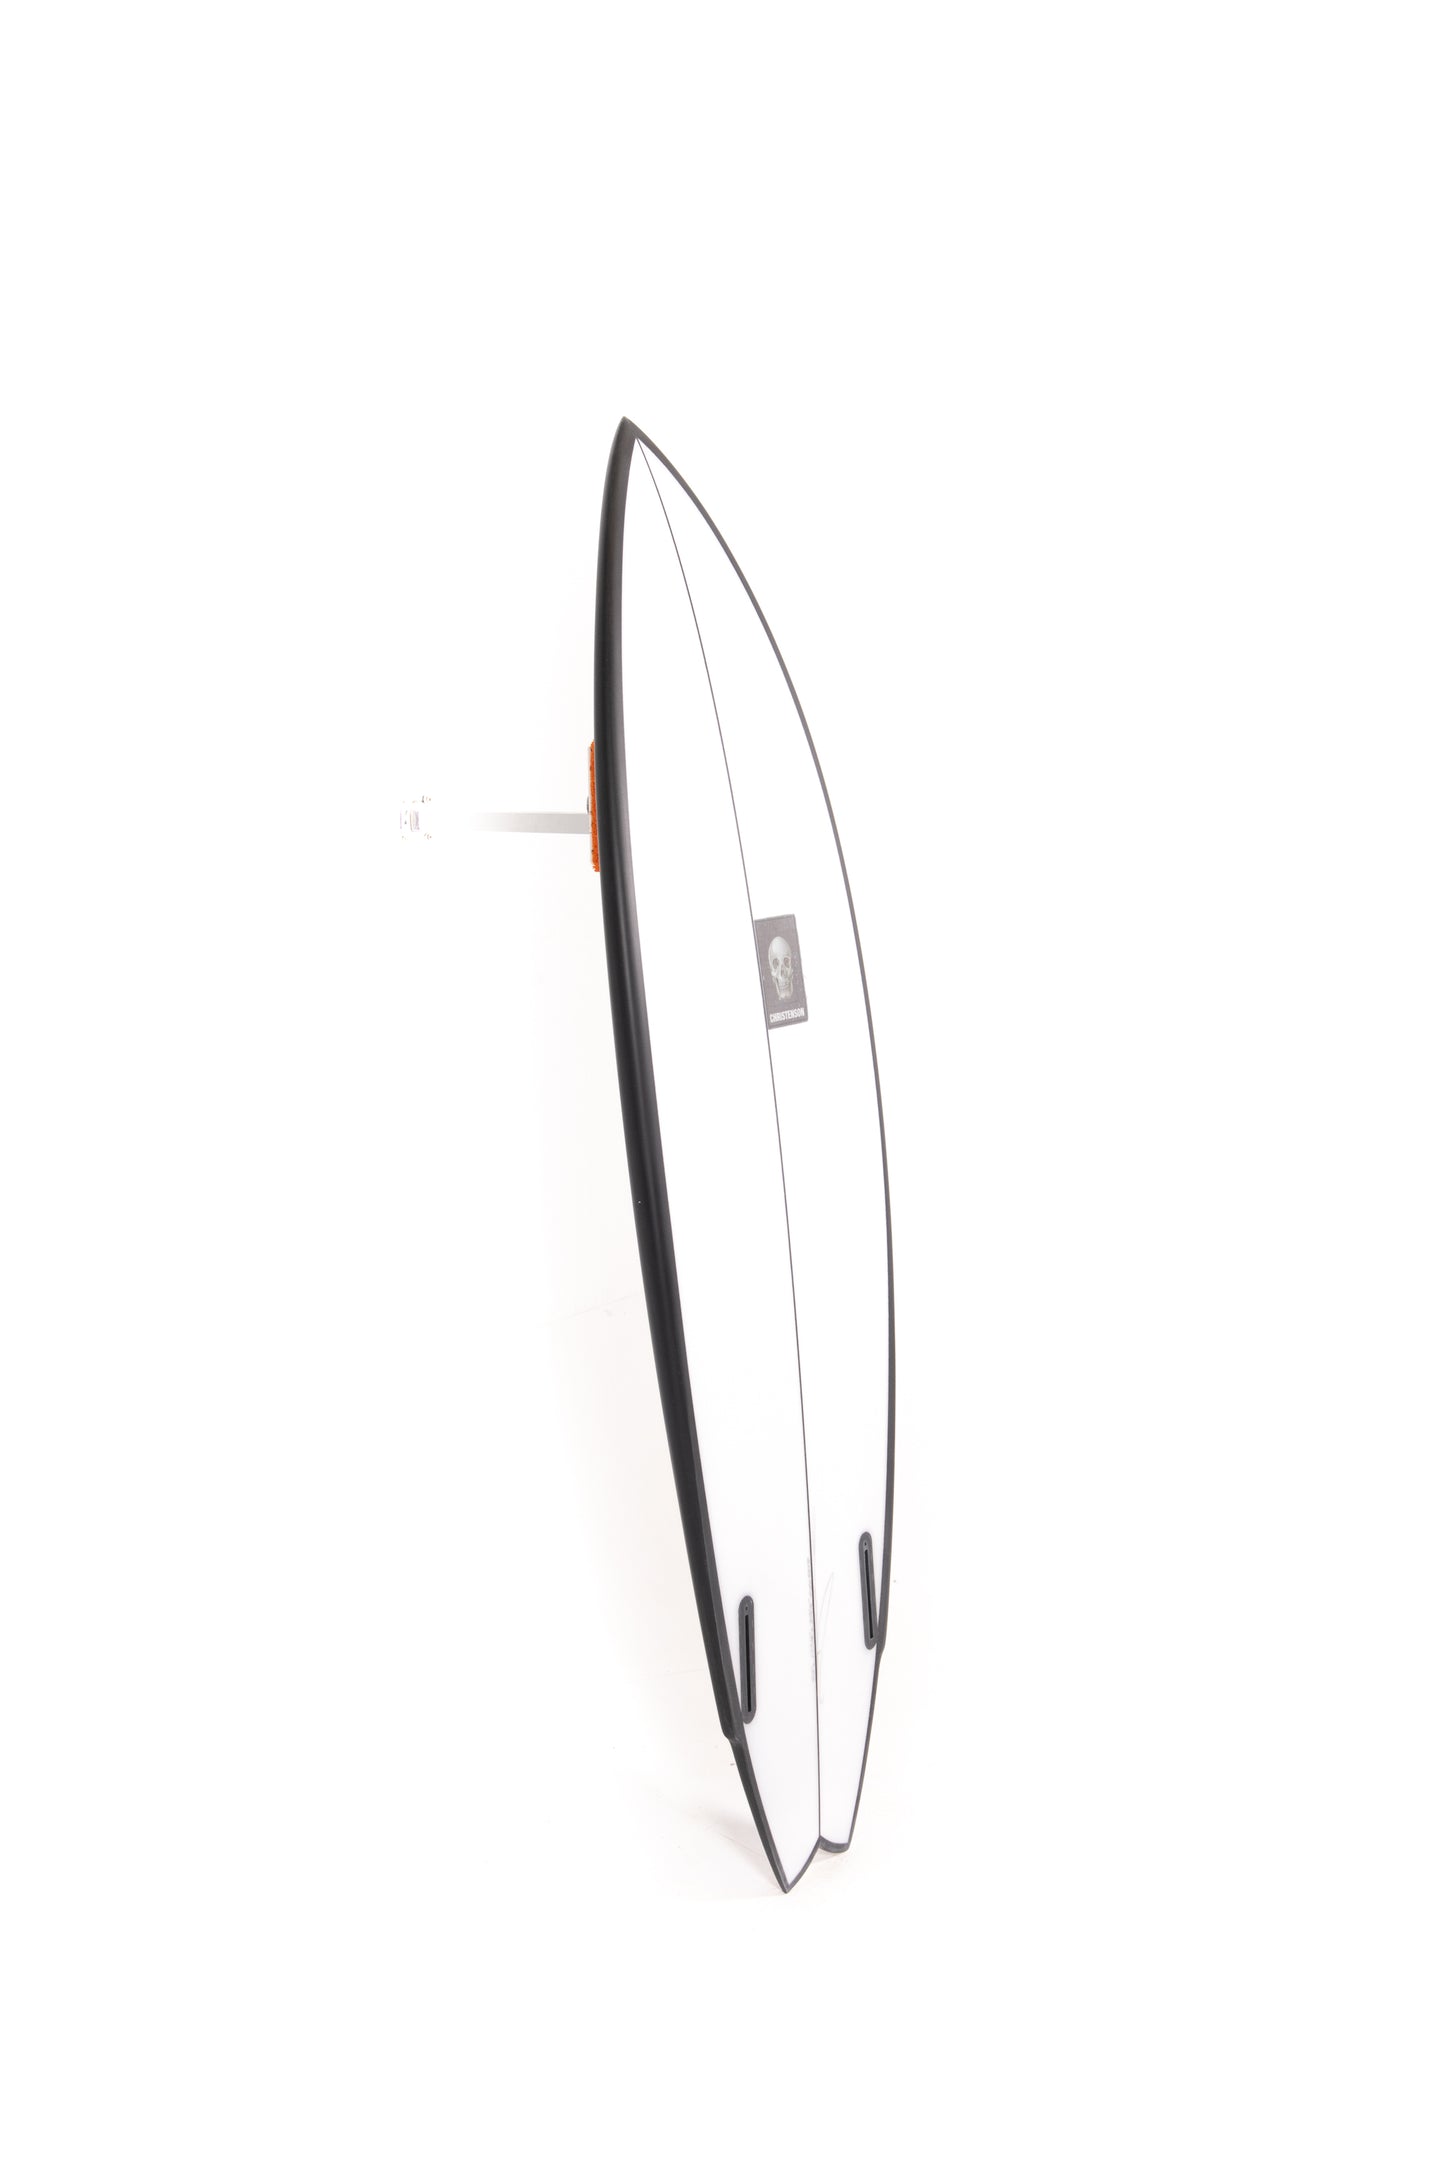 
                  
                    Pukas Surf Shop - Christenson Surfboards - LANE SPLITTER SWALLOW - 5'8" x 19 3/4 x 2 9/16 x 31,12L - CX05817
                  
                